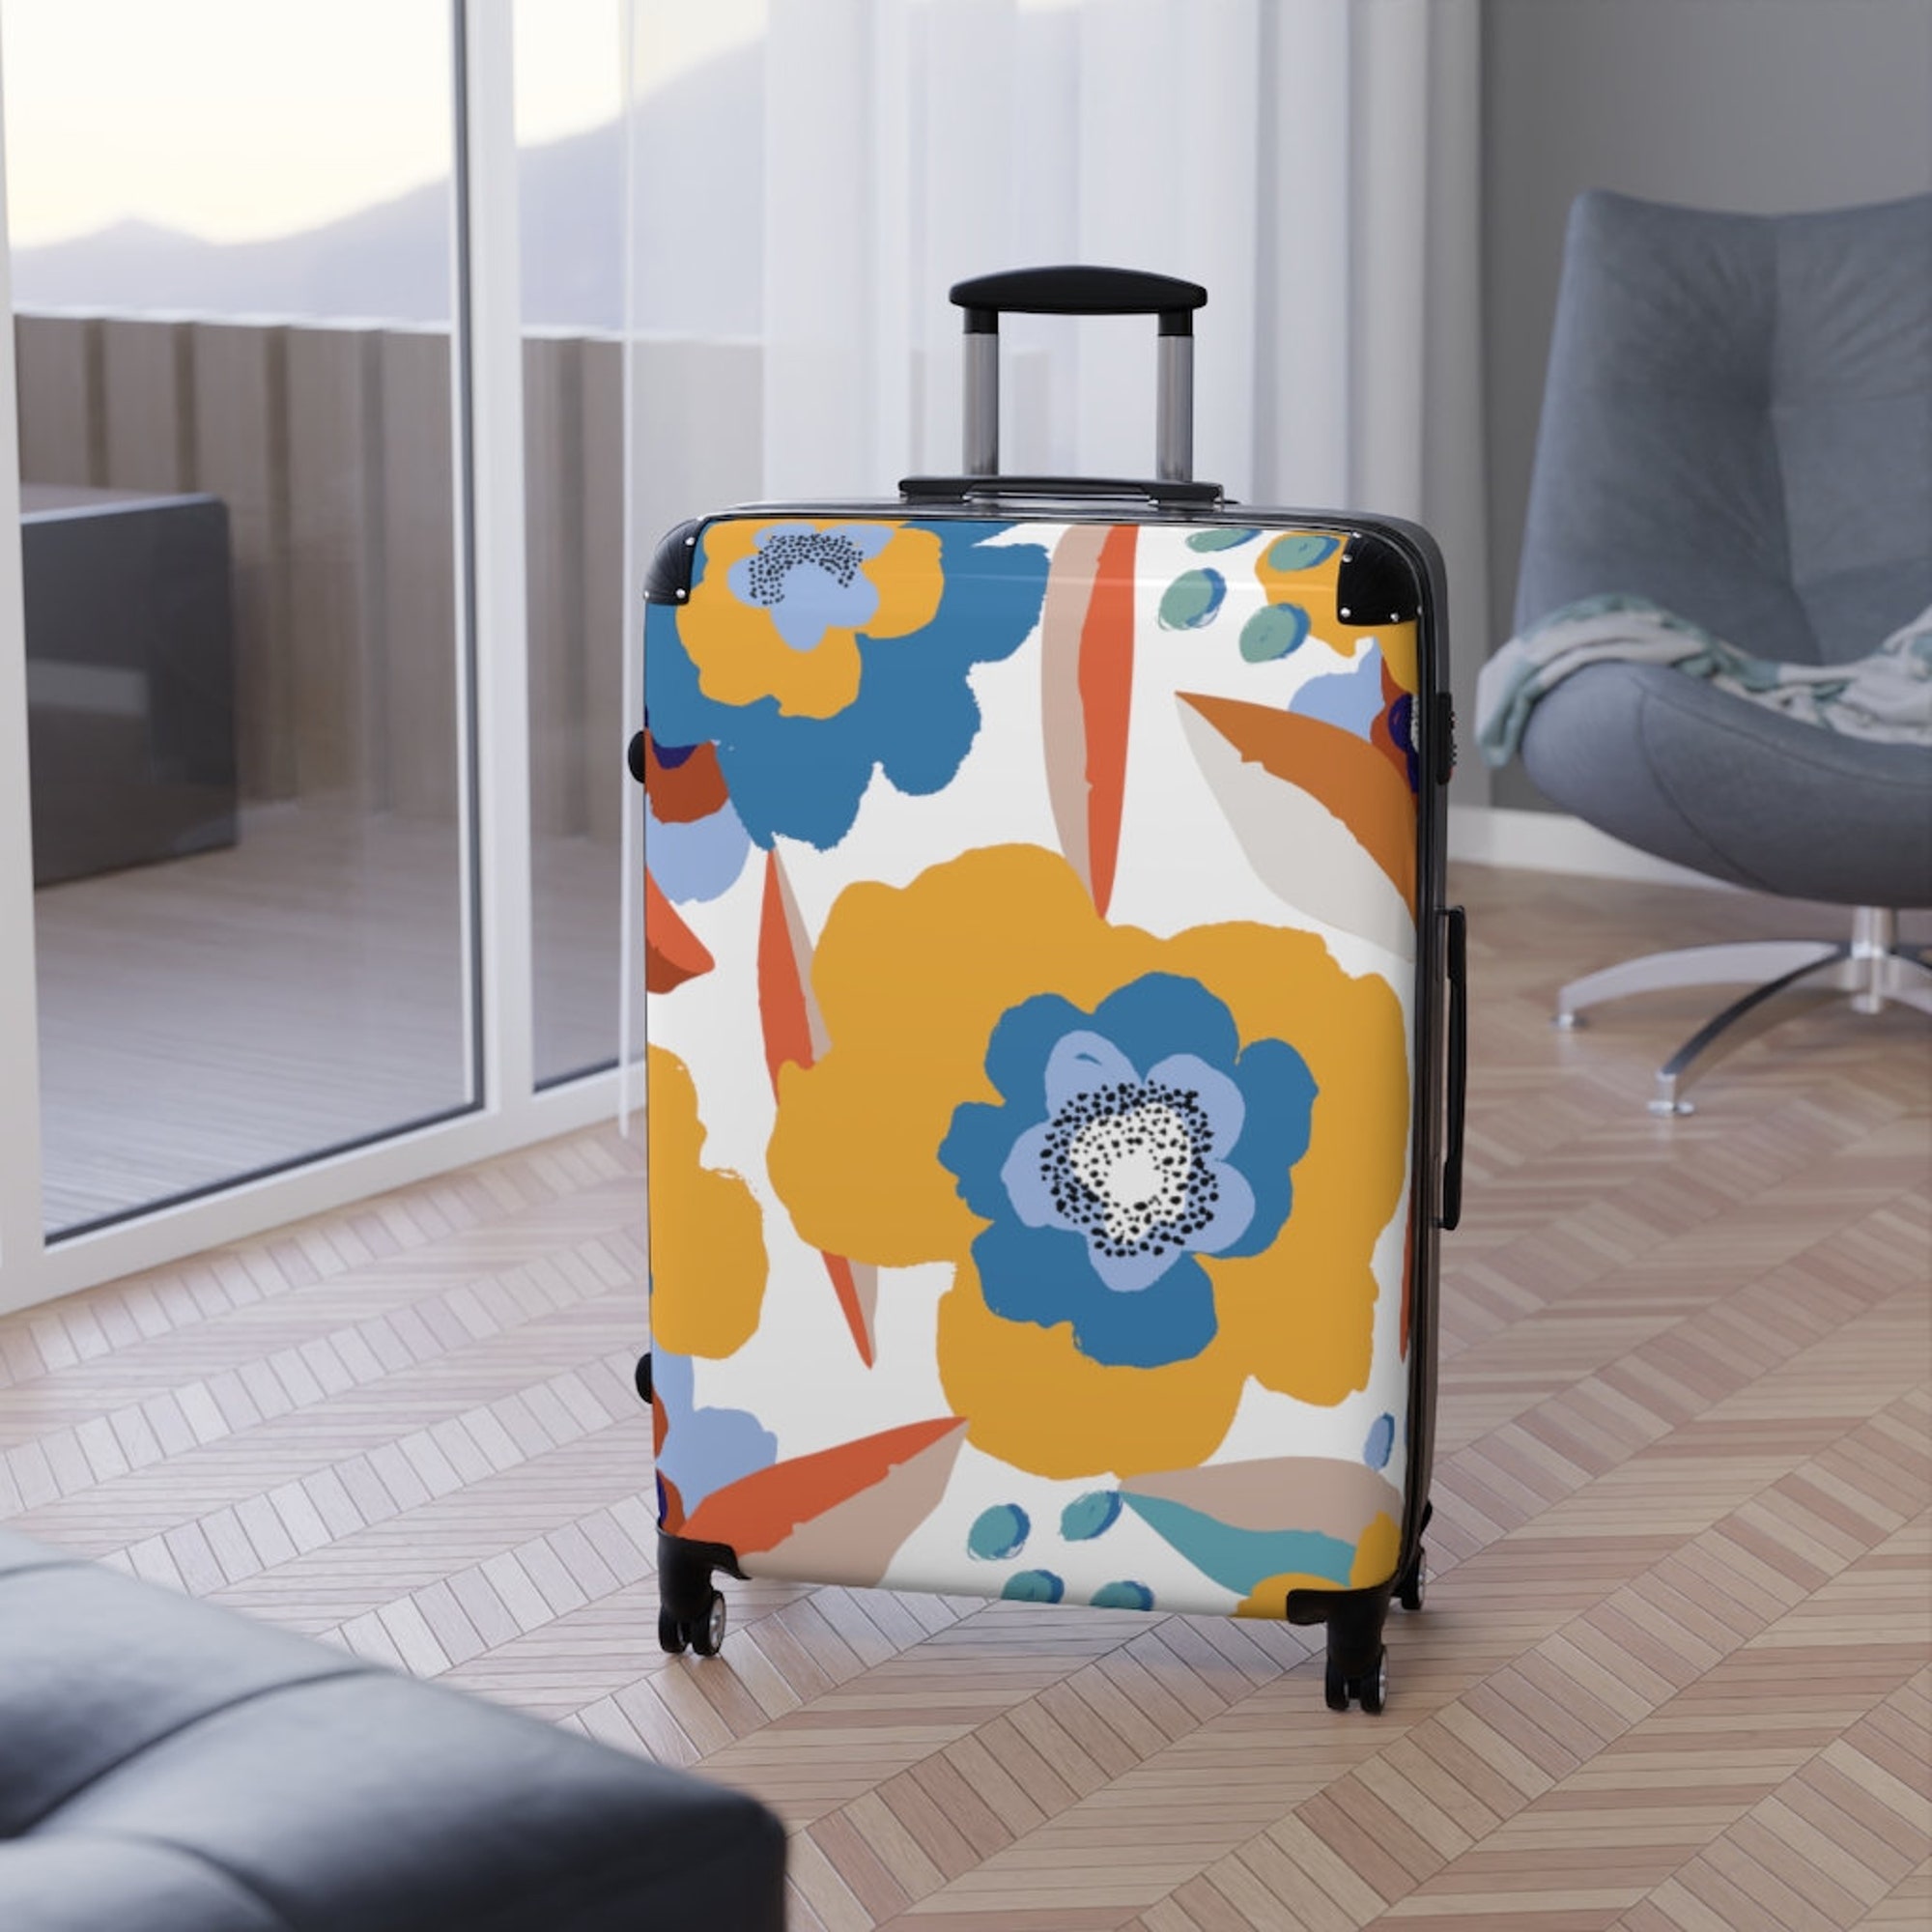 The Viola Suitcase